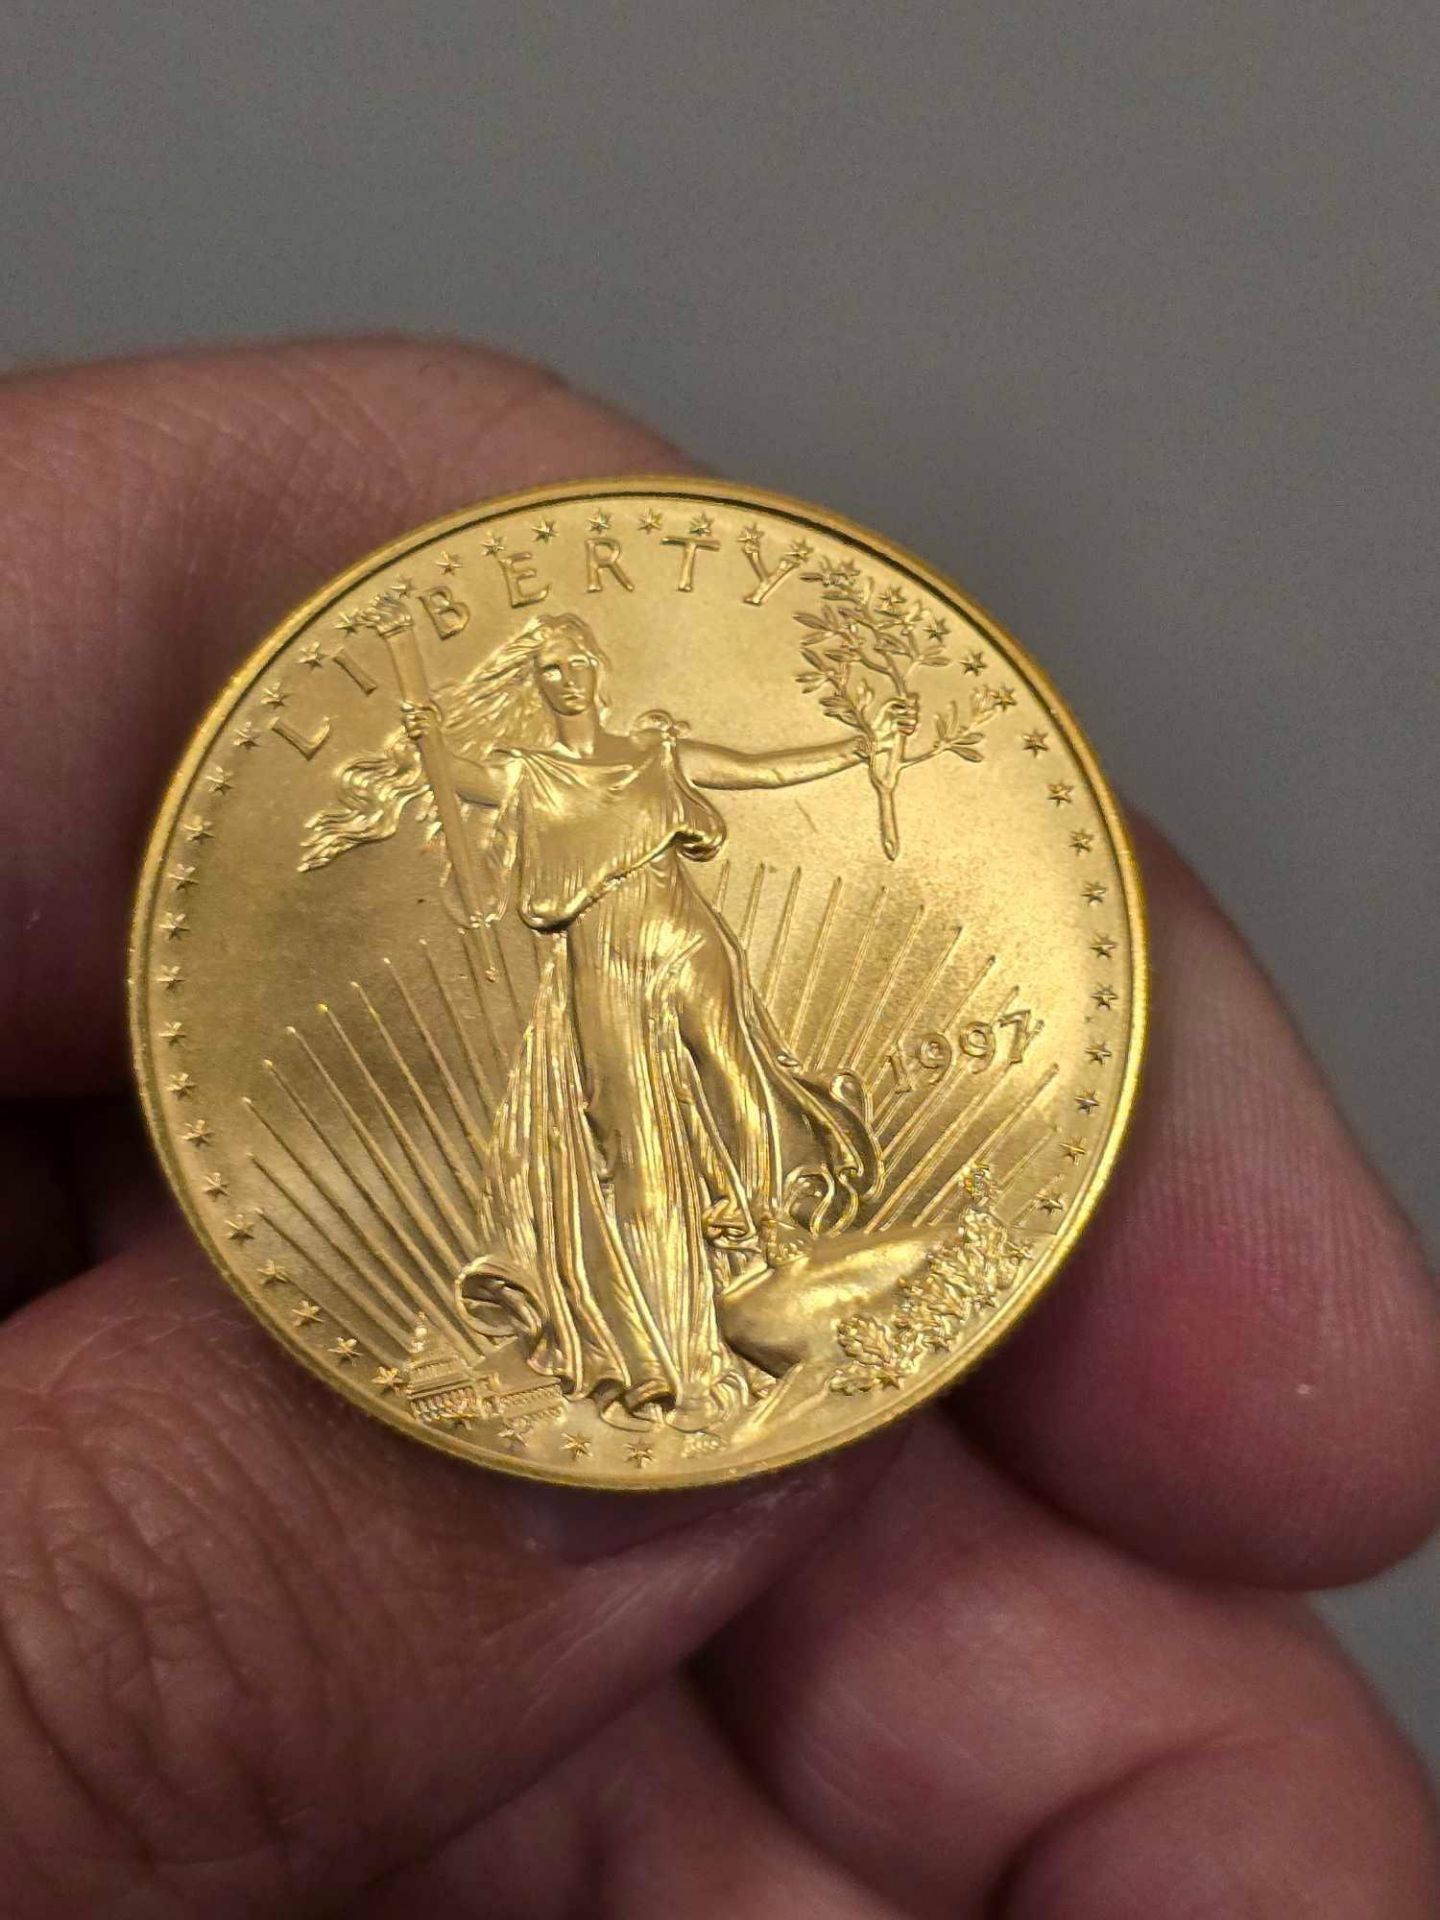 1997 1 oz gold eagle - Image 2 of 5